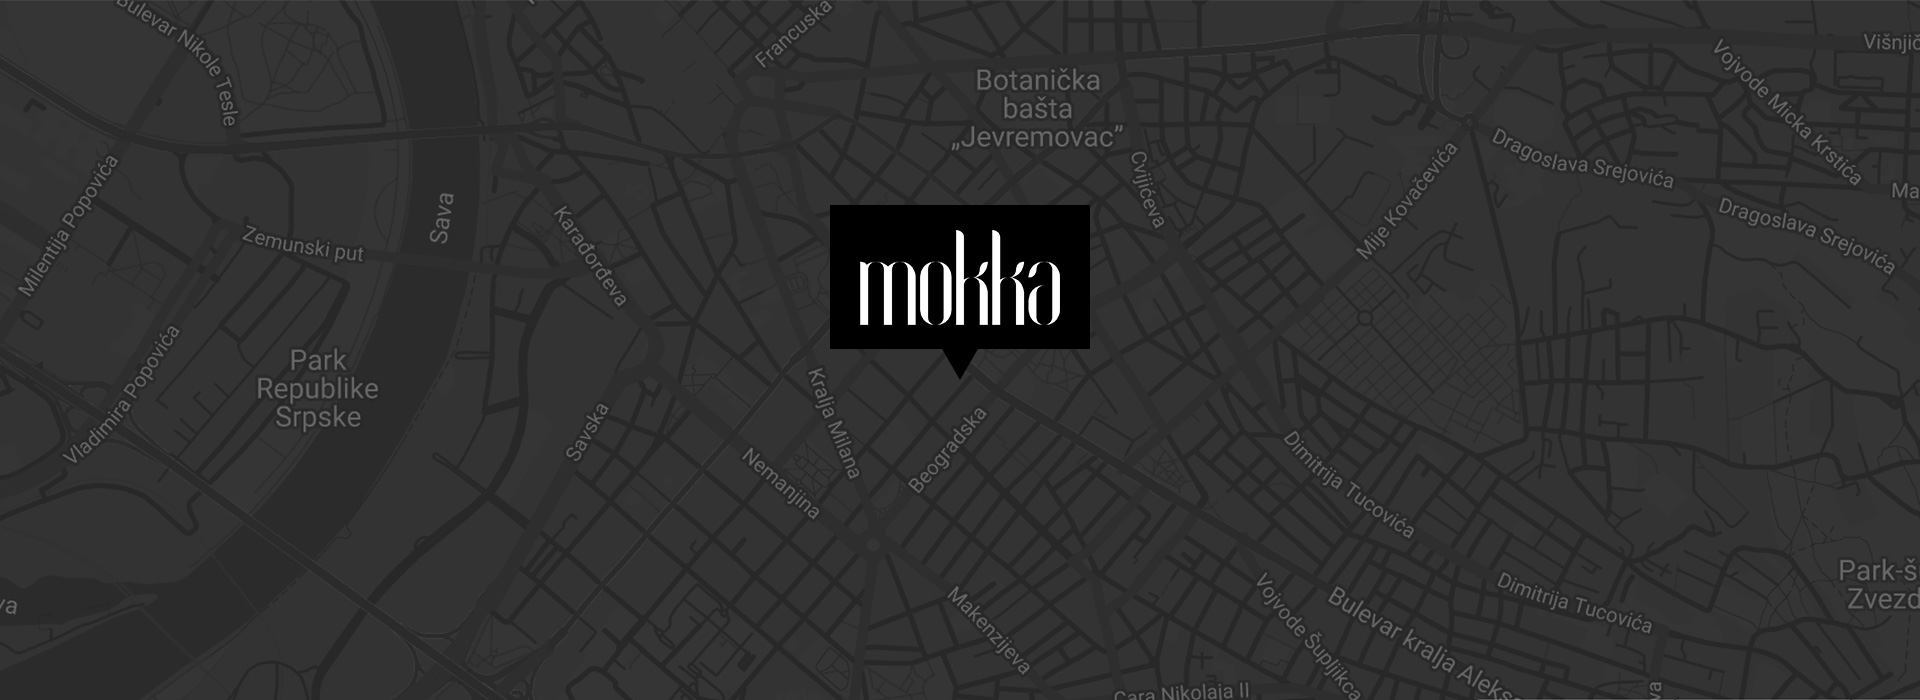 mokka mapa 2 Mokka Brand